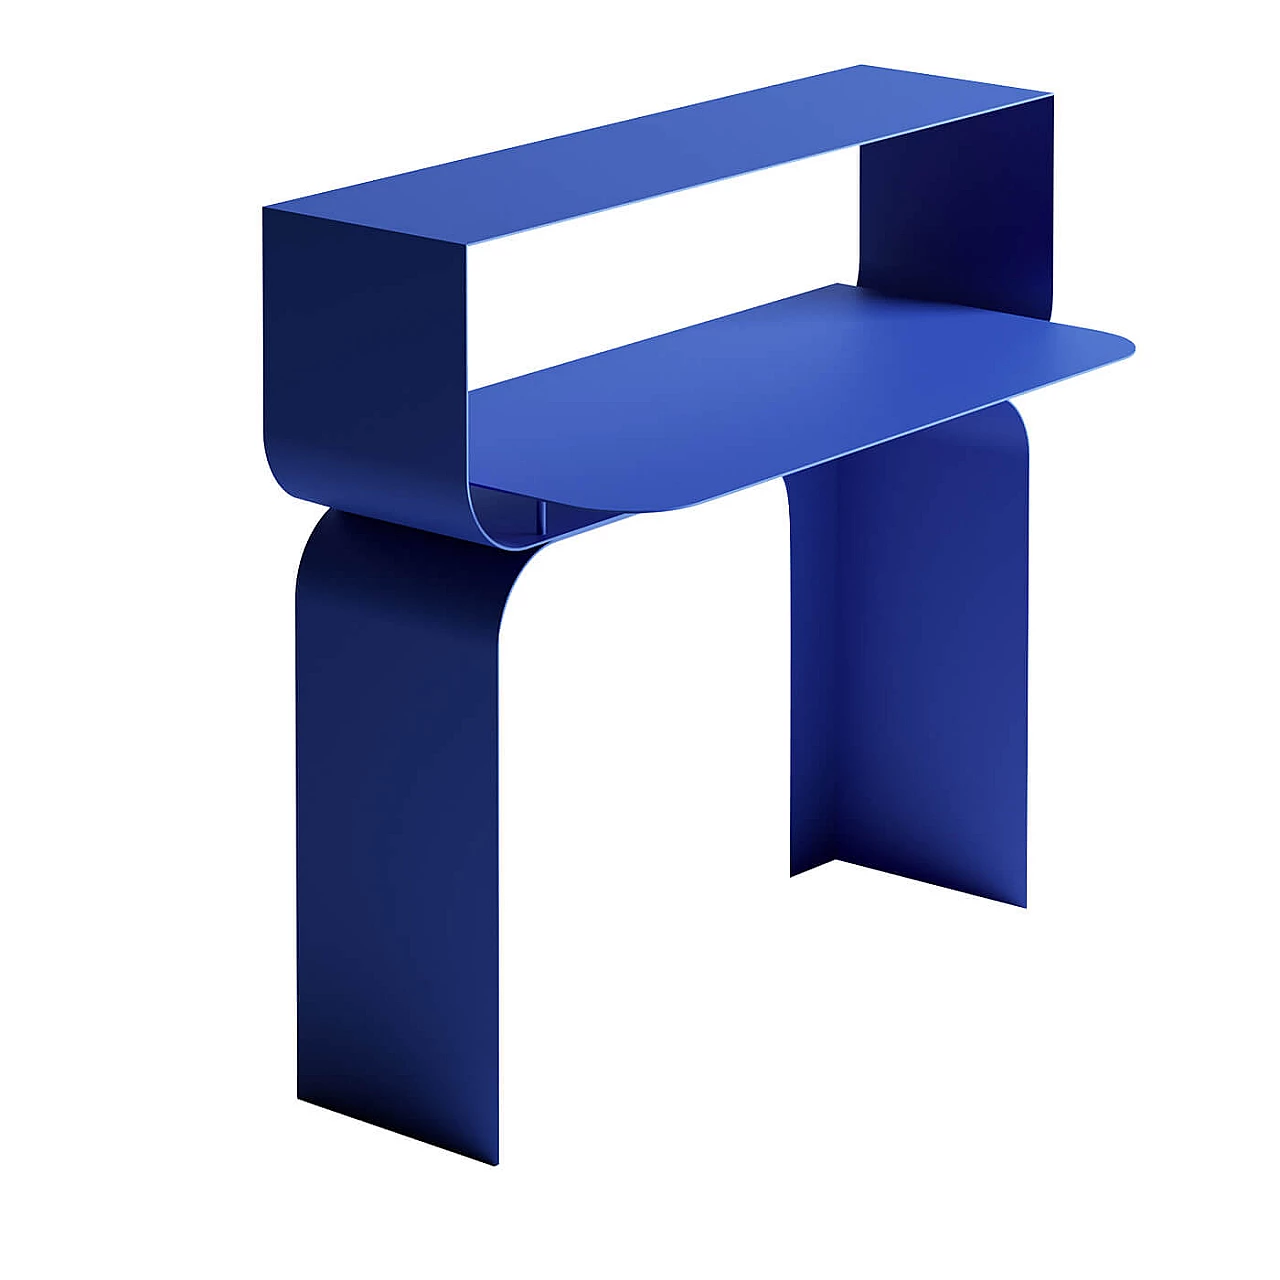 Titan console table in gentian blue Corten 1152763